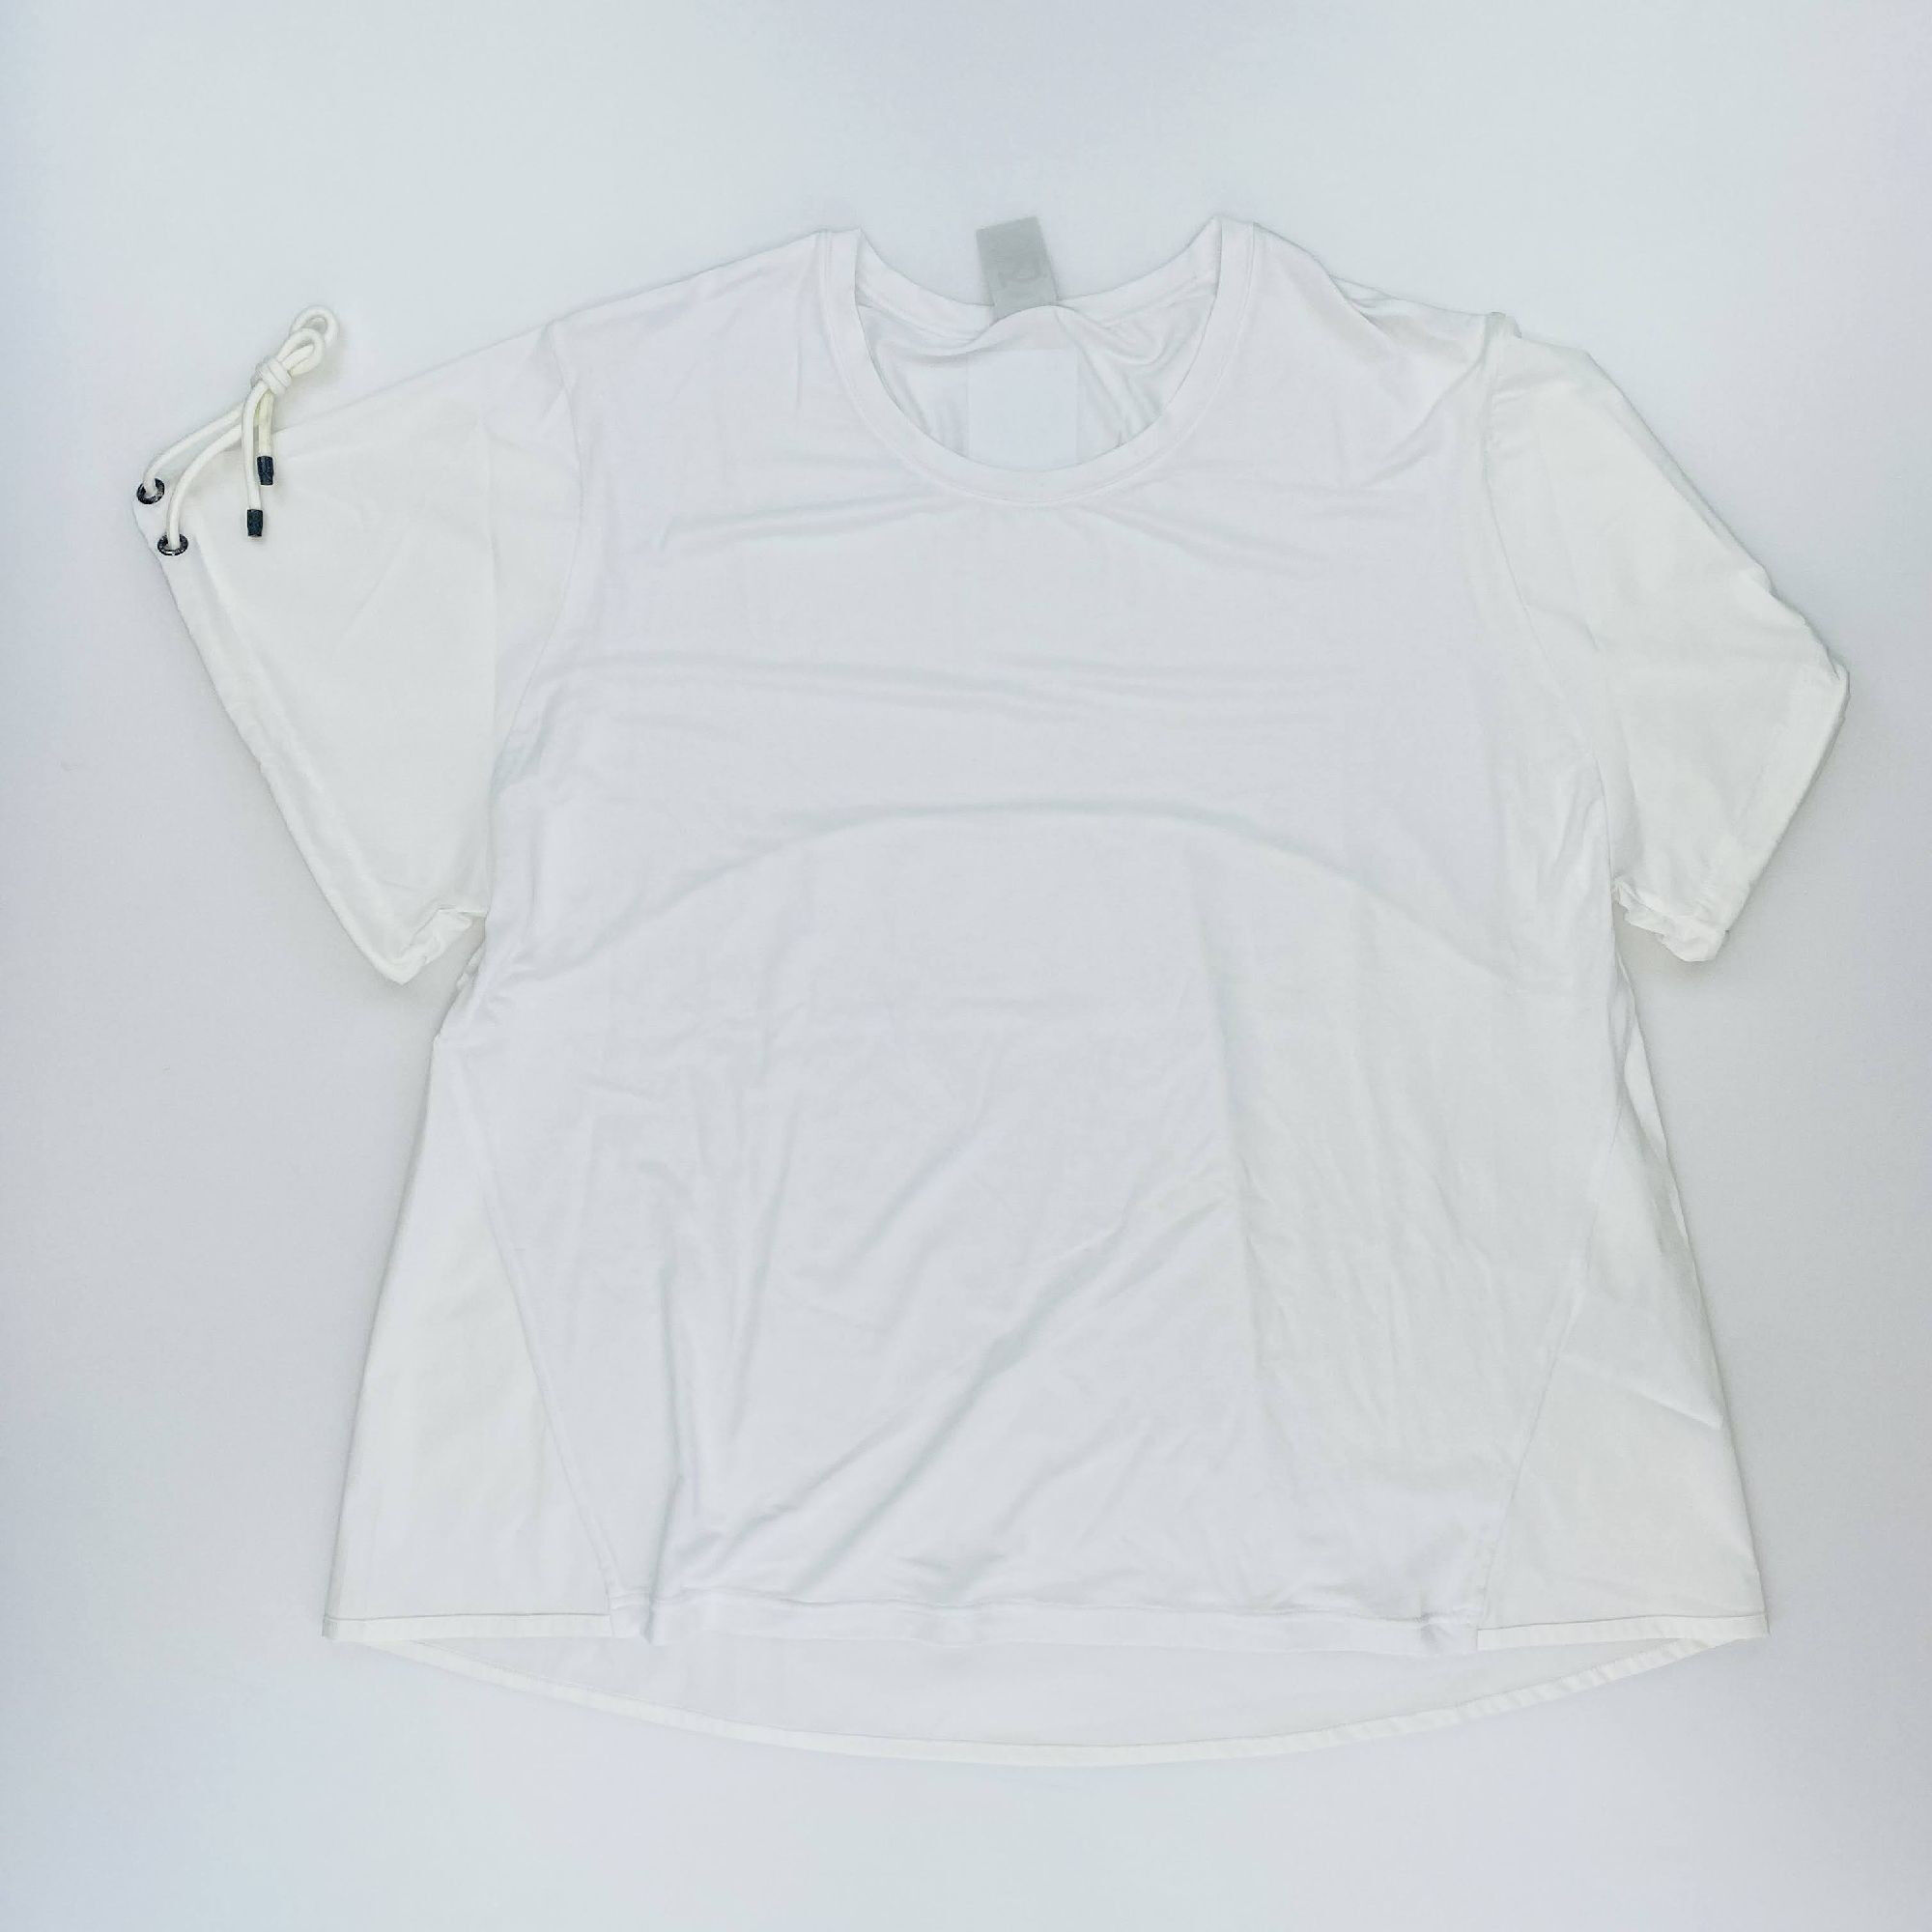 Kari Traa Voss Tee - Seconde main T-shirt femme - Blanc - M | Hardloop